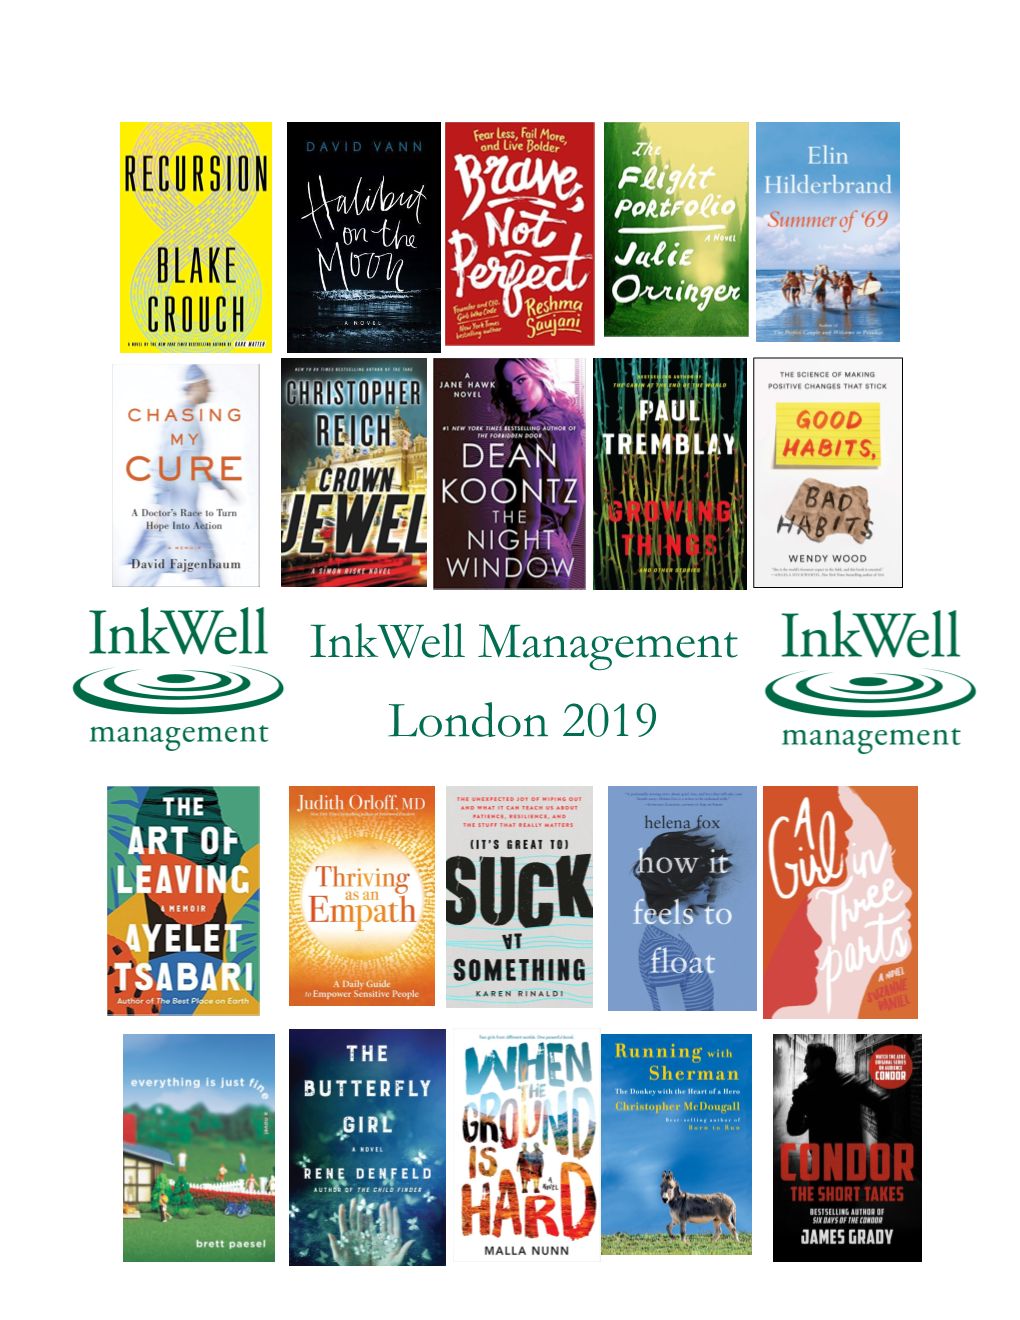 Inkwell Management London 2019